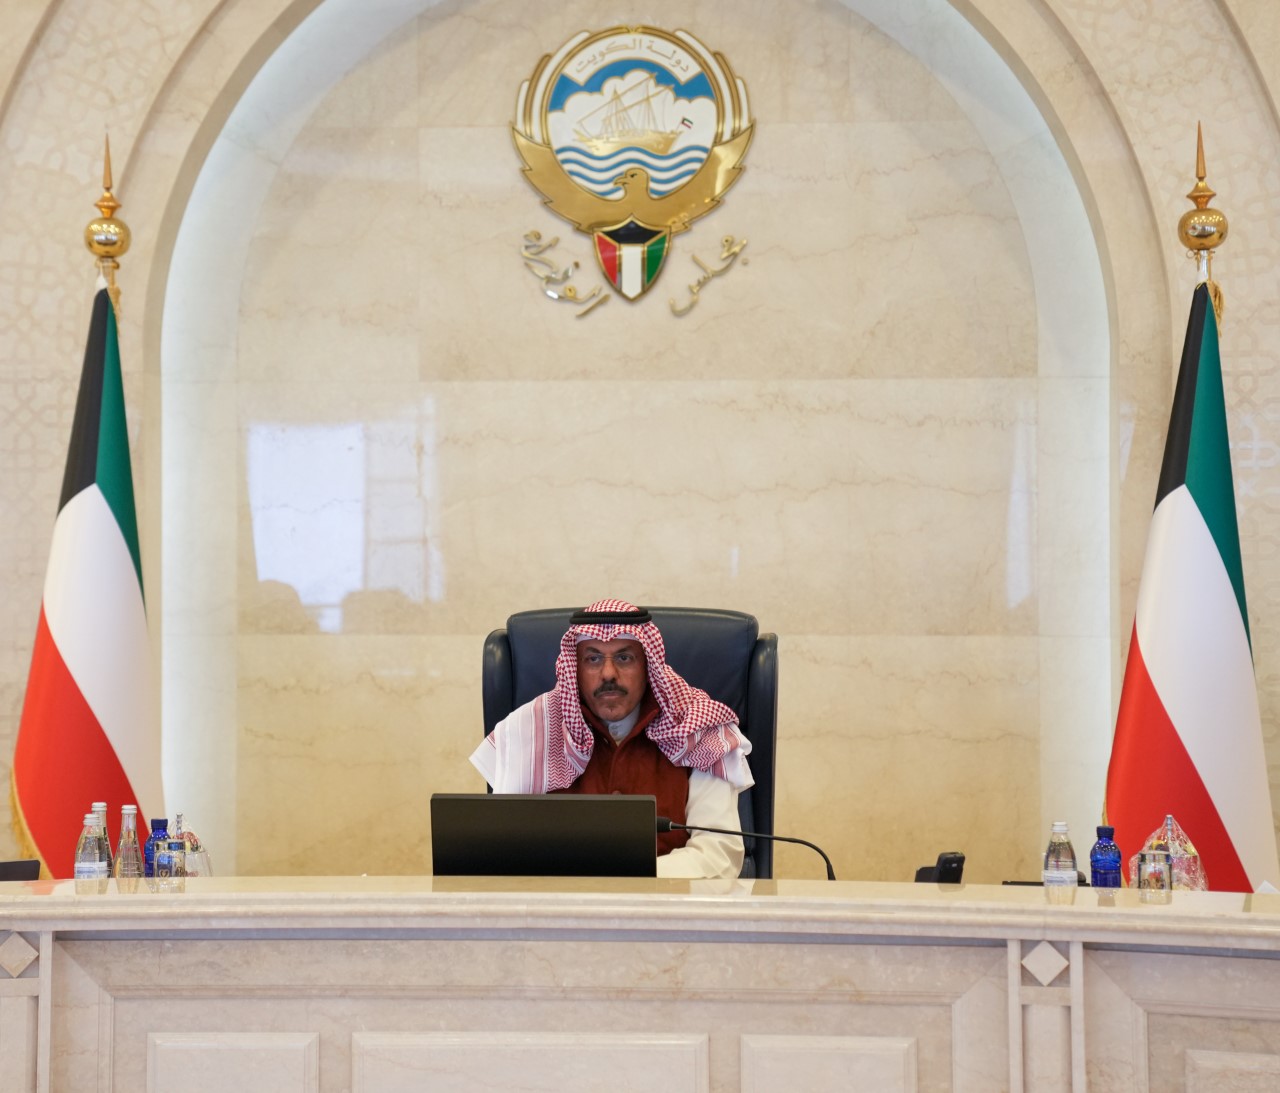 His Highness Prime Minister Sheikh Ahmad Nawaf Al-Ahmad Al-Sabah